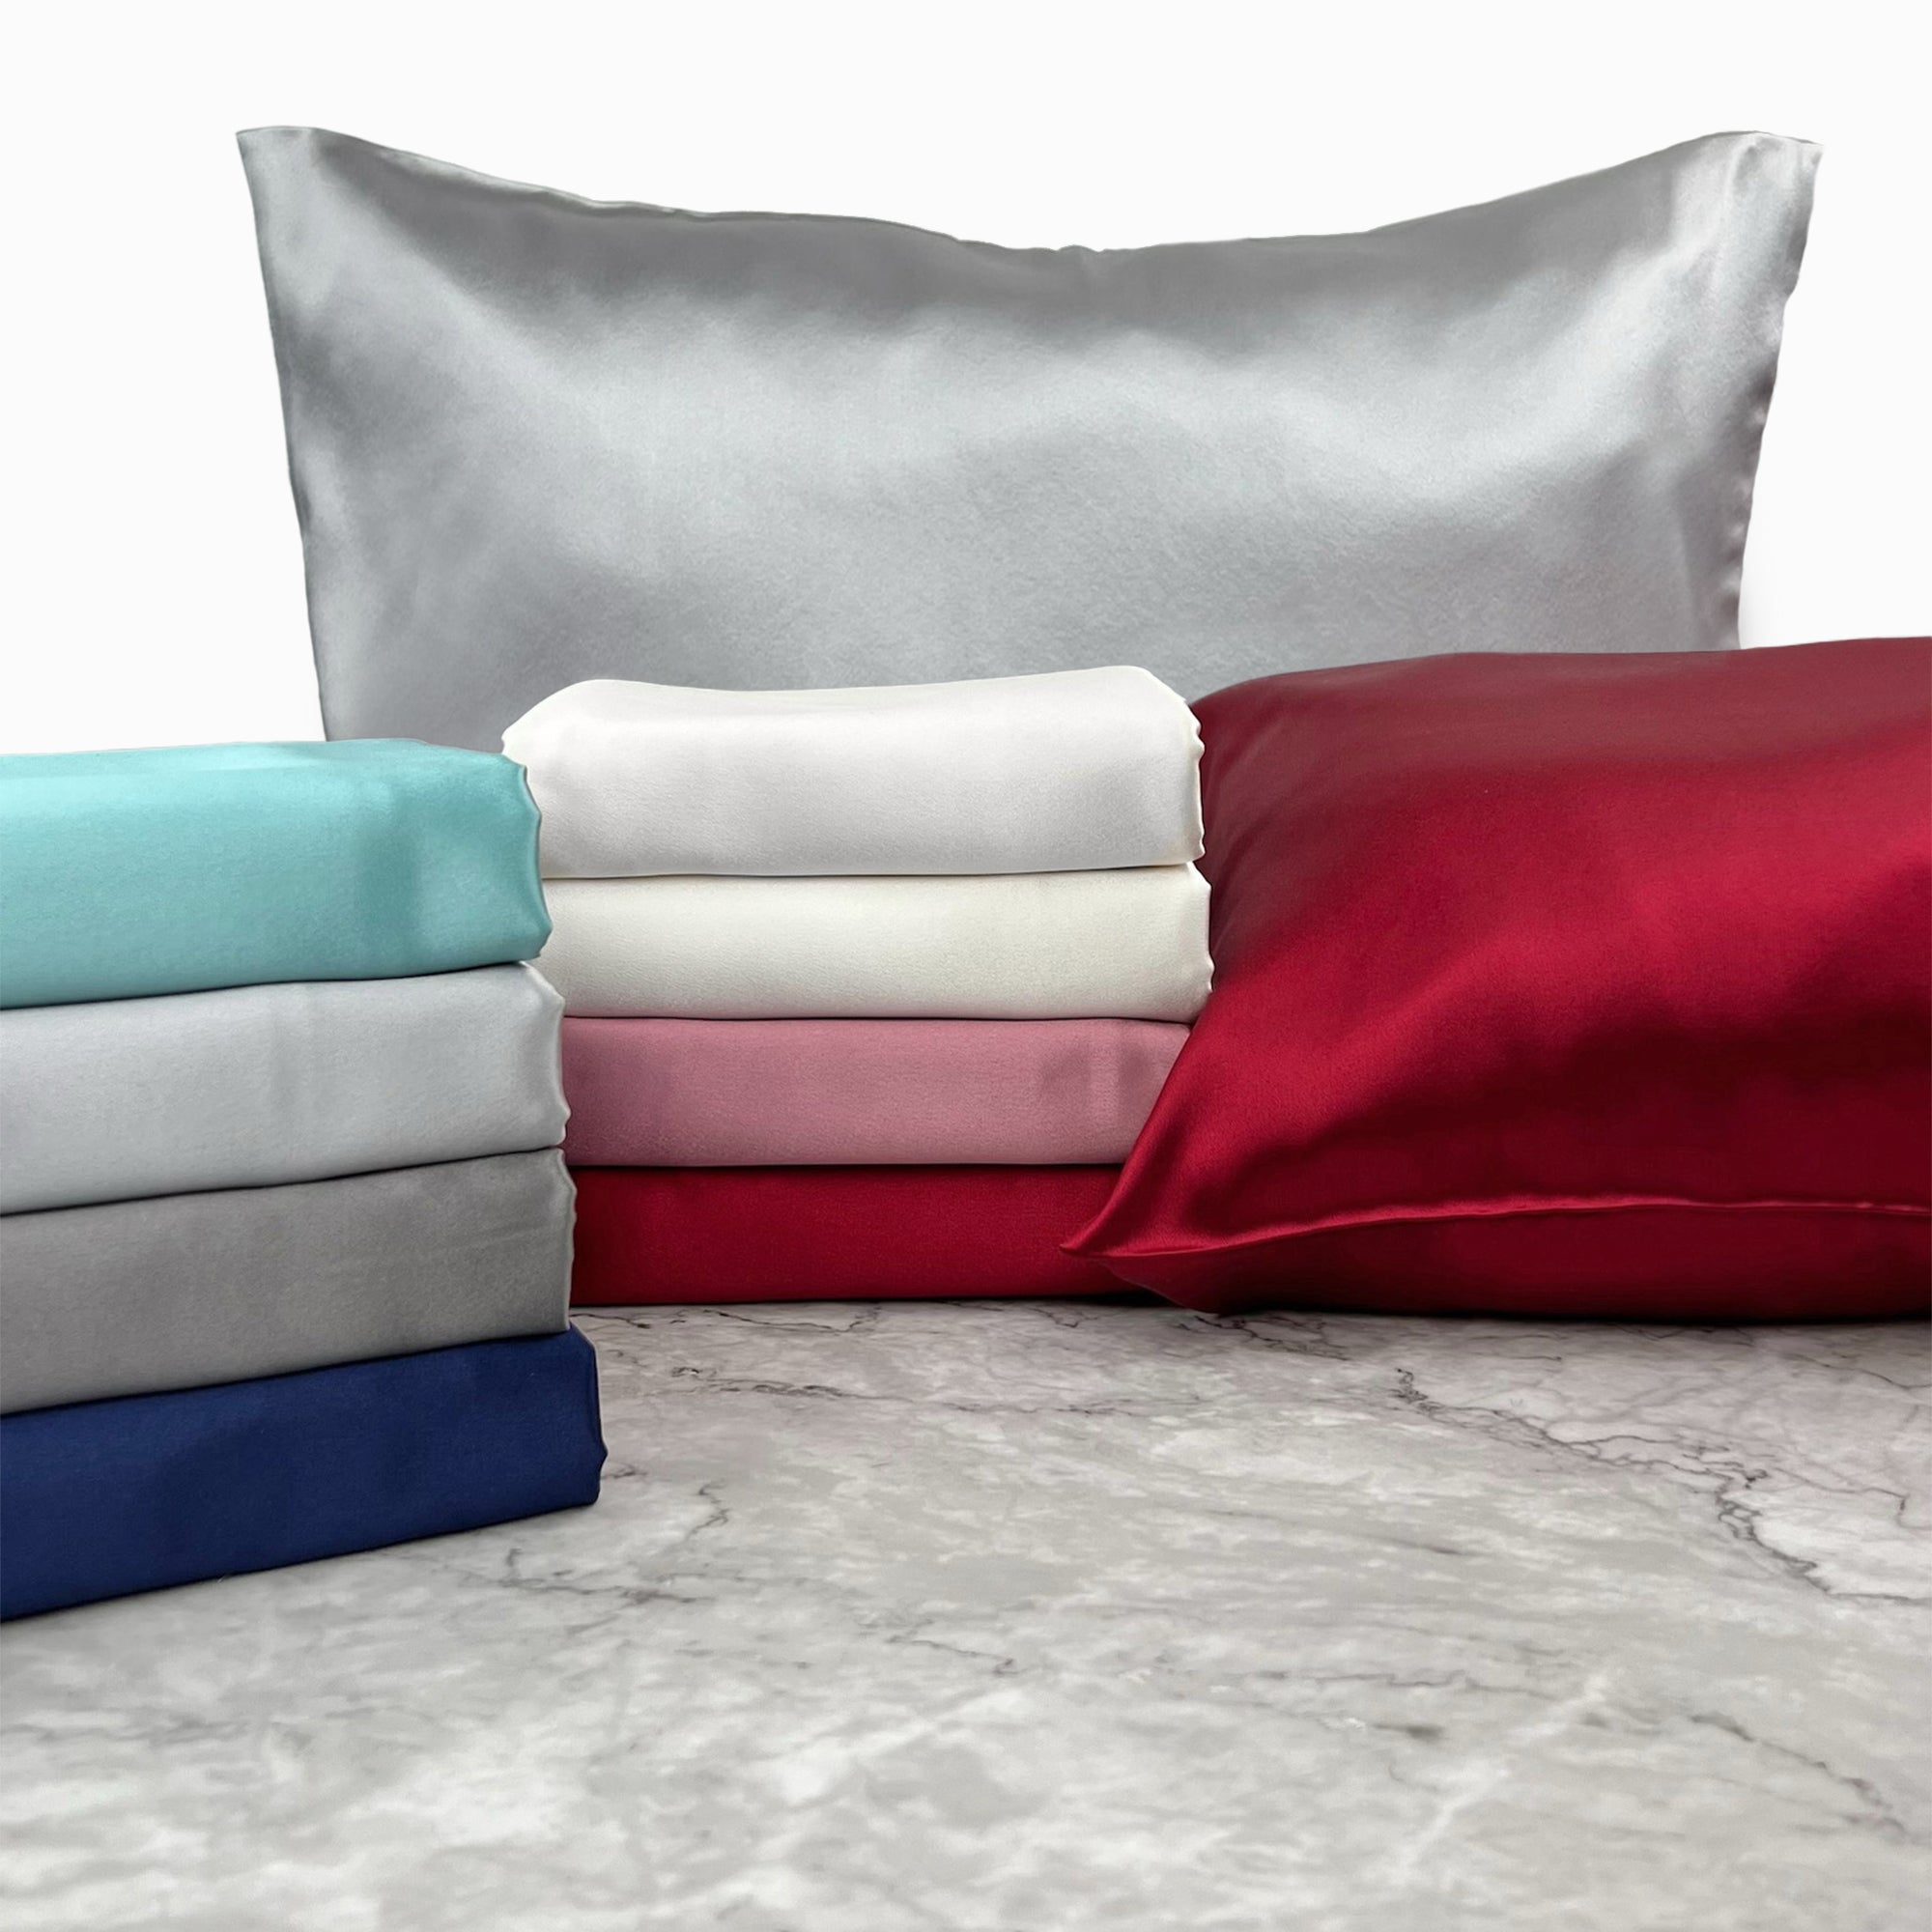 30 Momme Silk Pillowcases